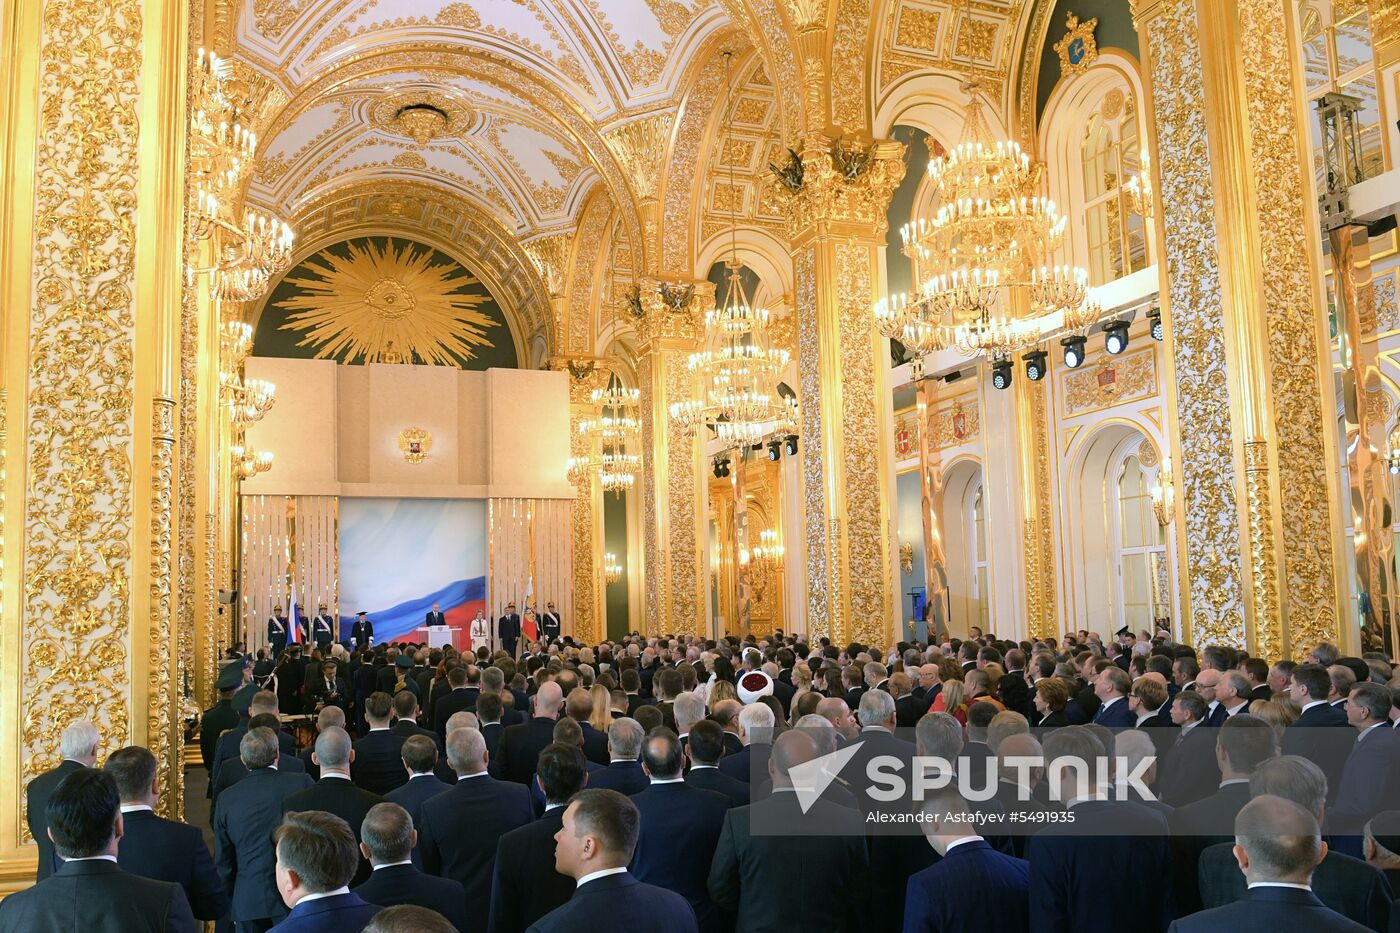 Inauguration of Russian President Vladimir Putin